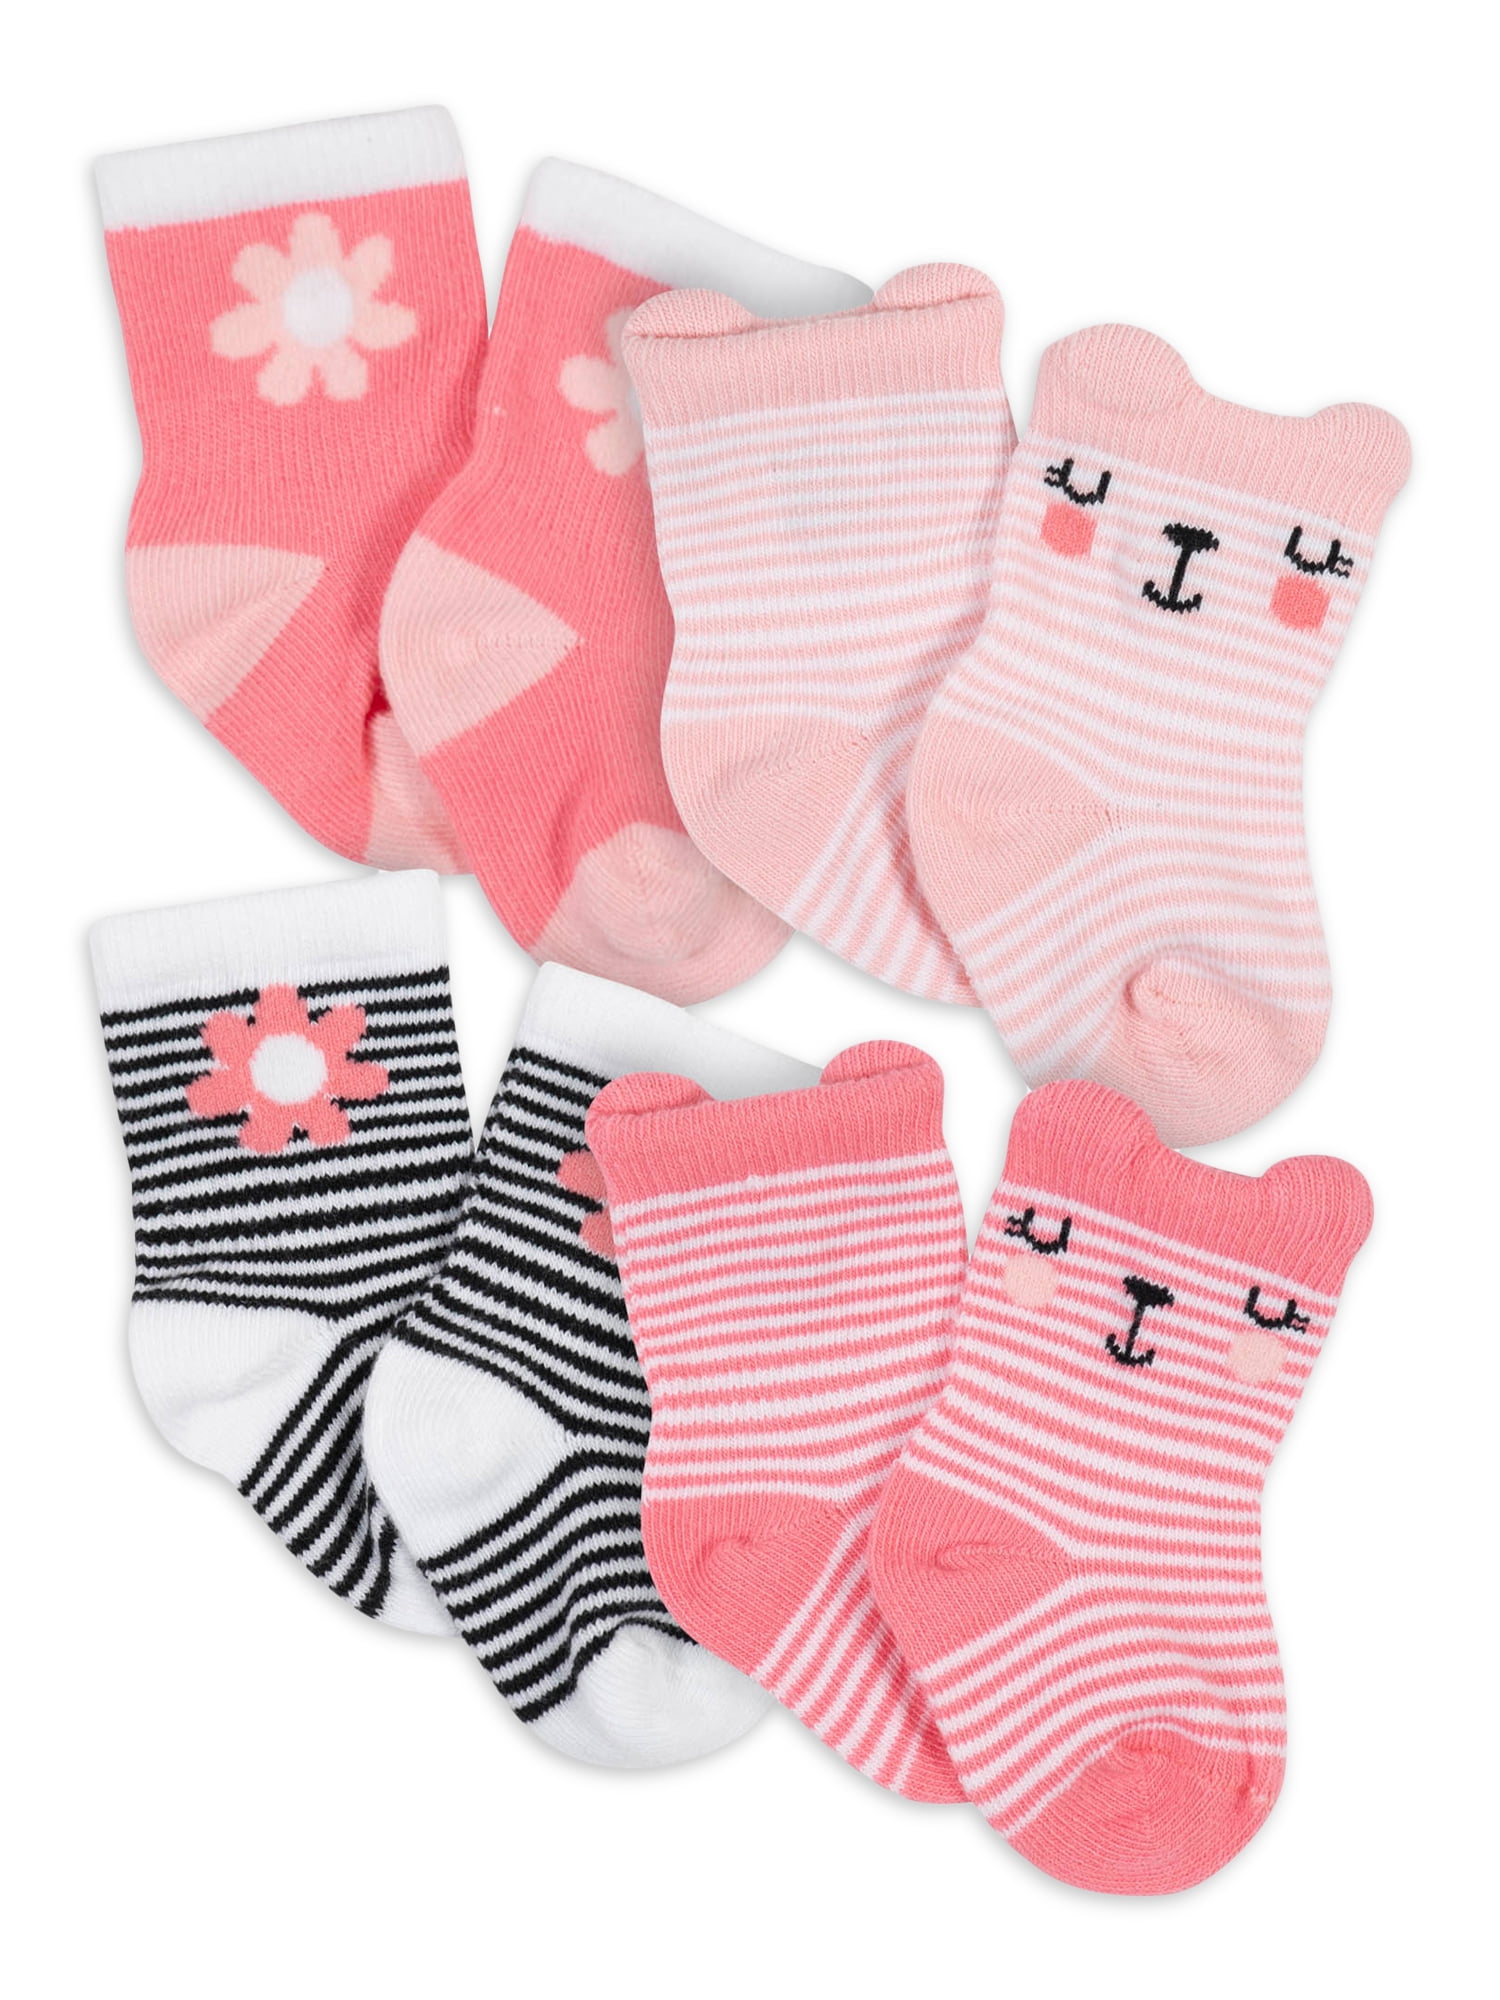 Gerber Baby Girl Wiggle Proof Socks, 4-Pack (Newborn - 0/6M)